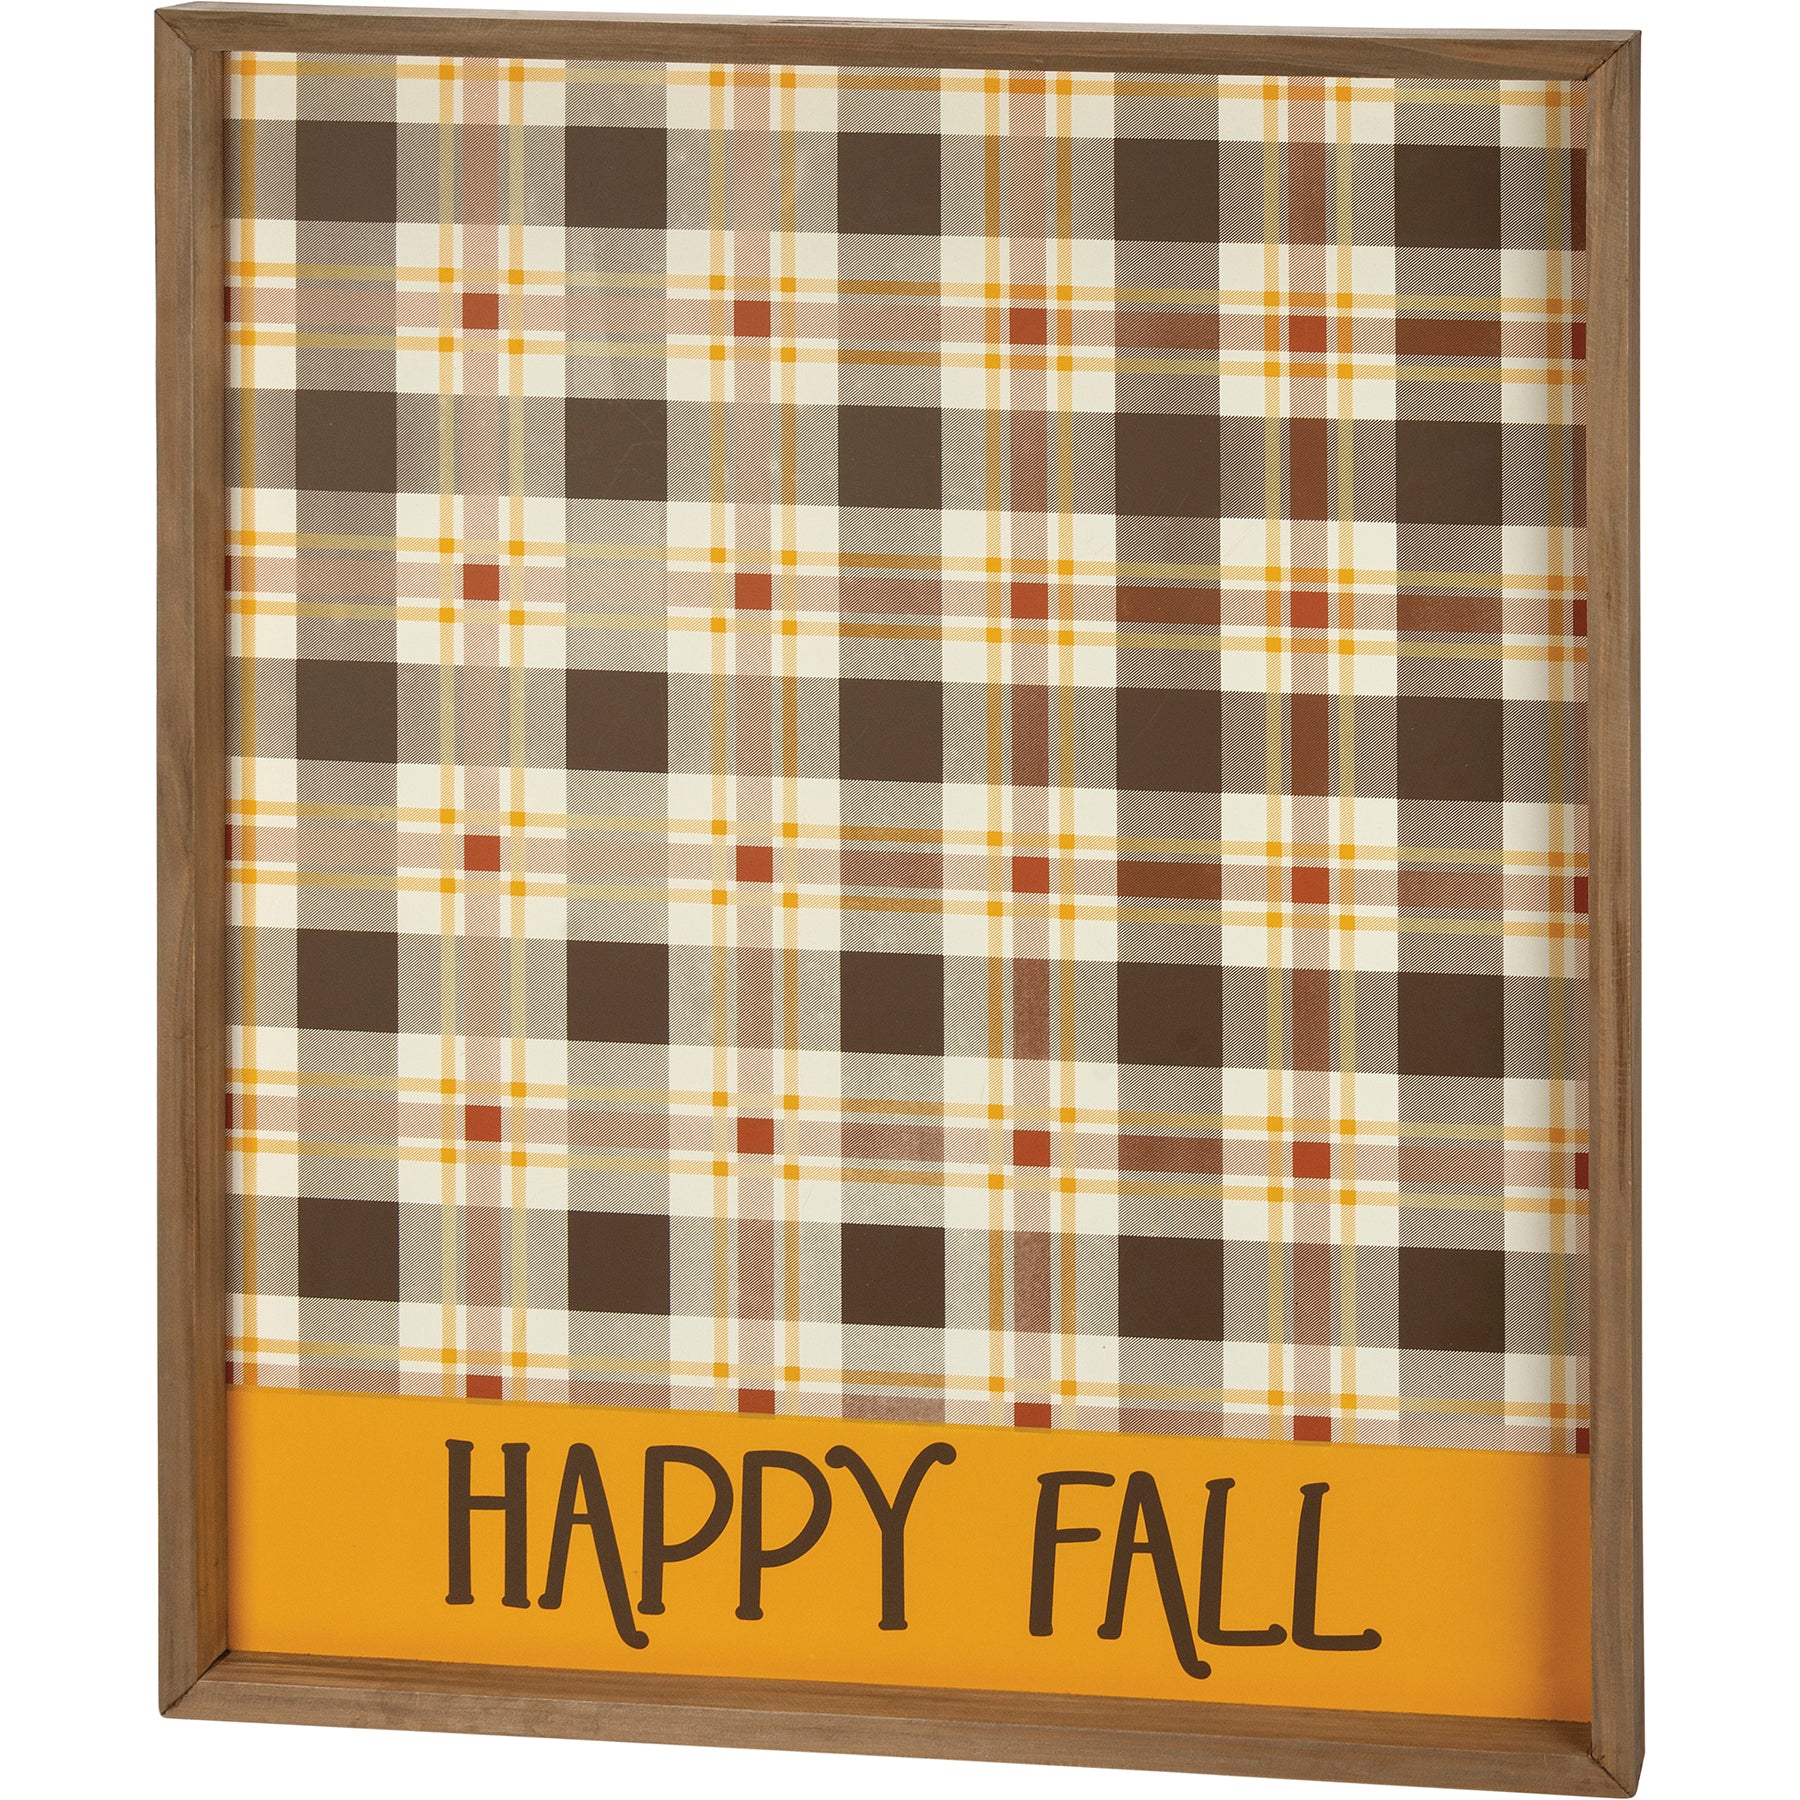 'Happy Fall' Shadow Box